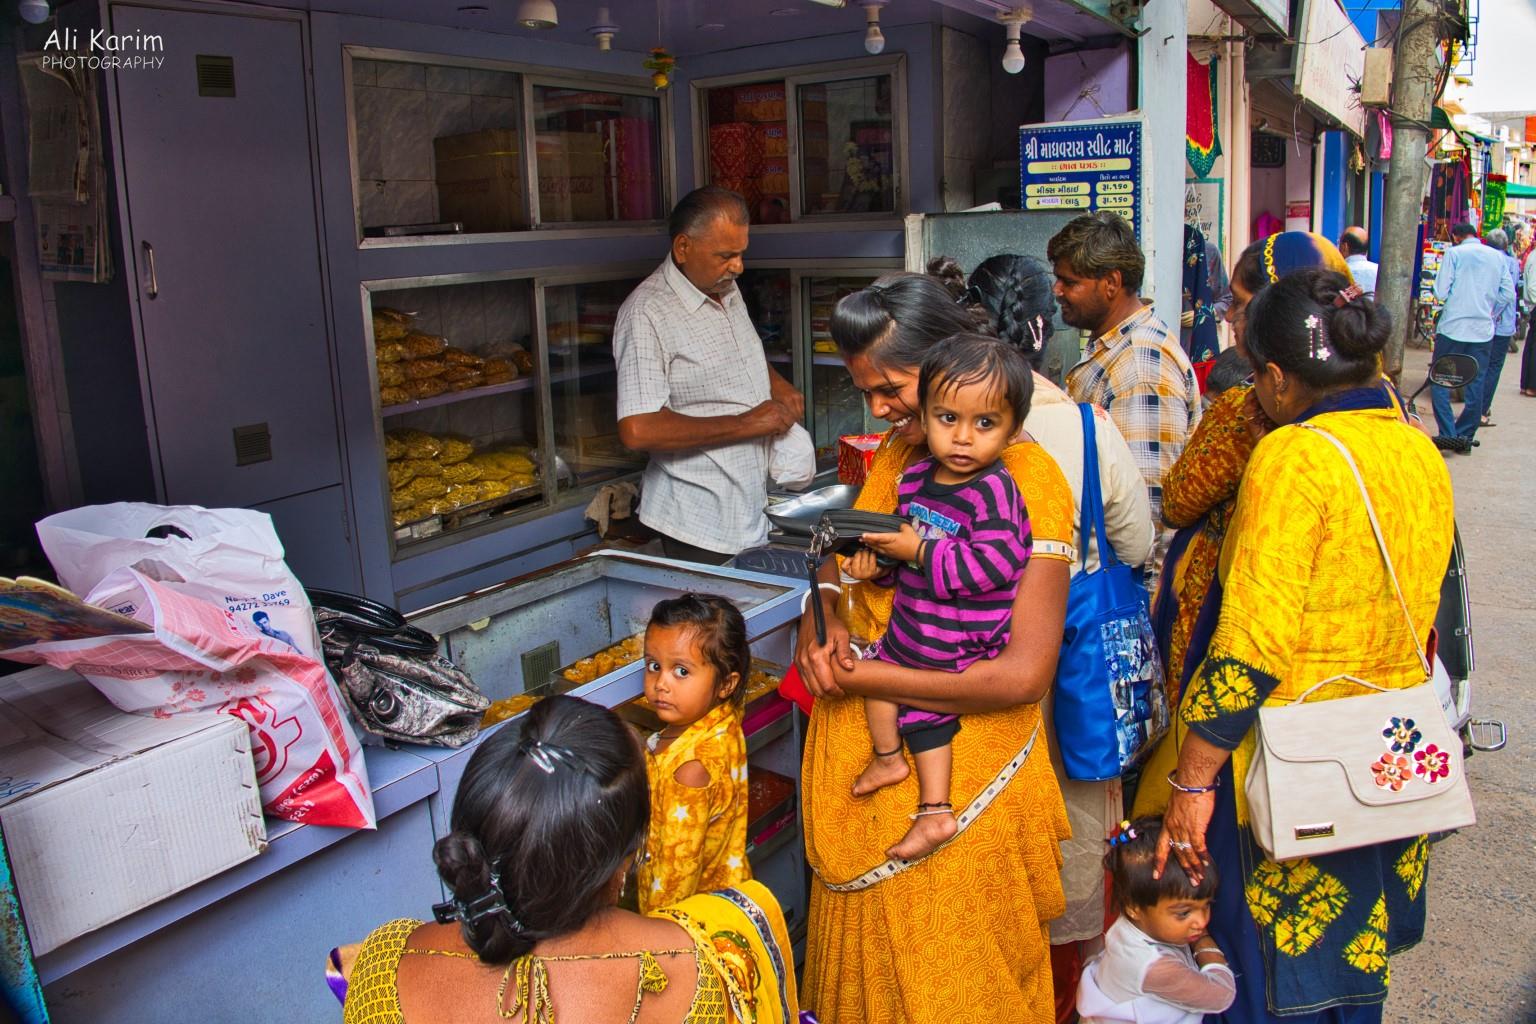 More Bhuj Snack shops were quite popular also